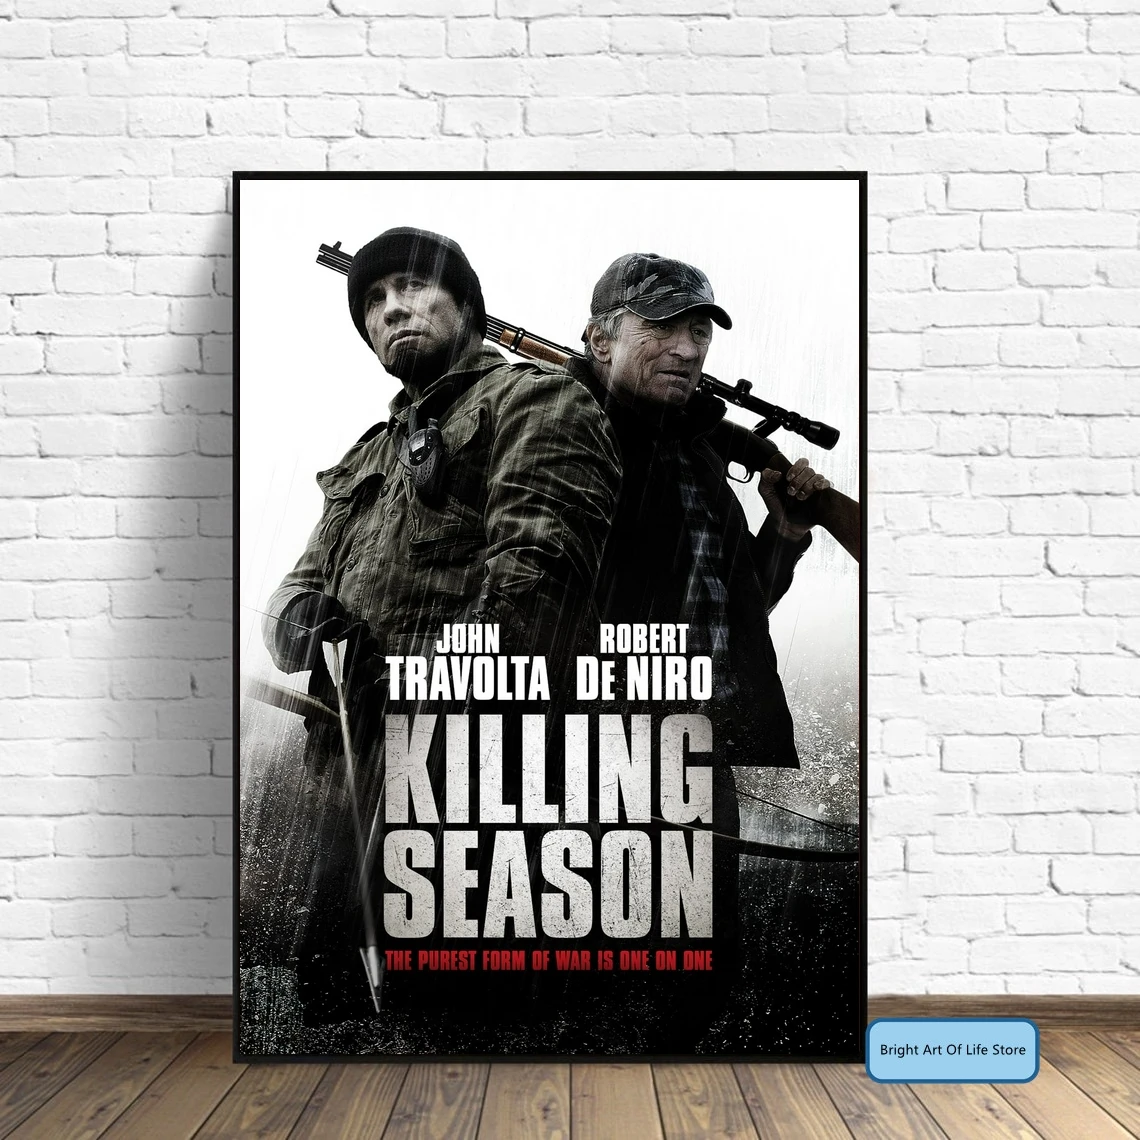 Killing Season (2013) Poster Film Cover Photo Print Canvas Wall Art Decor Acasă (Fara Rama)0